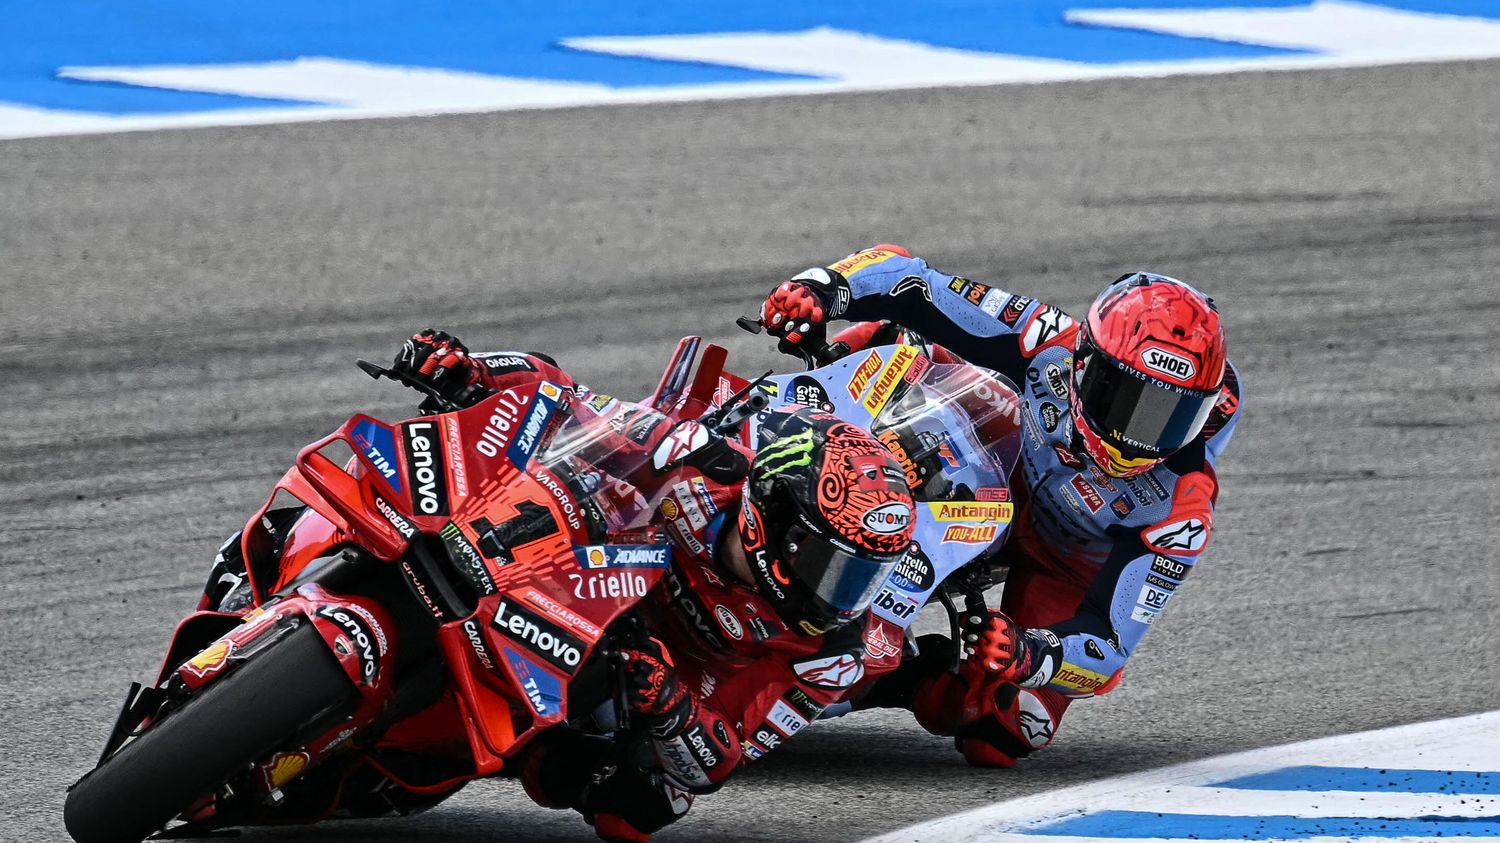 MotoGP: Francesco Bagnaia wins the Spanish Grand Prix after a thrilling duel with Marc Marquez